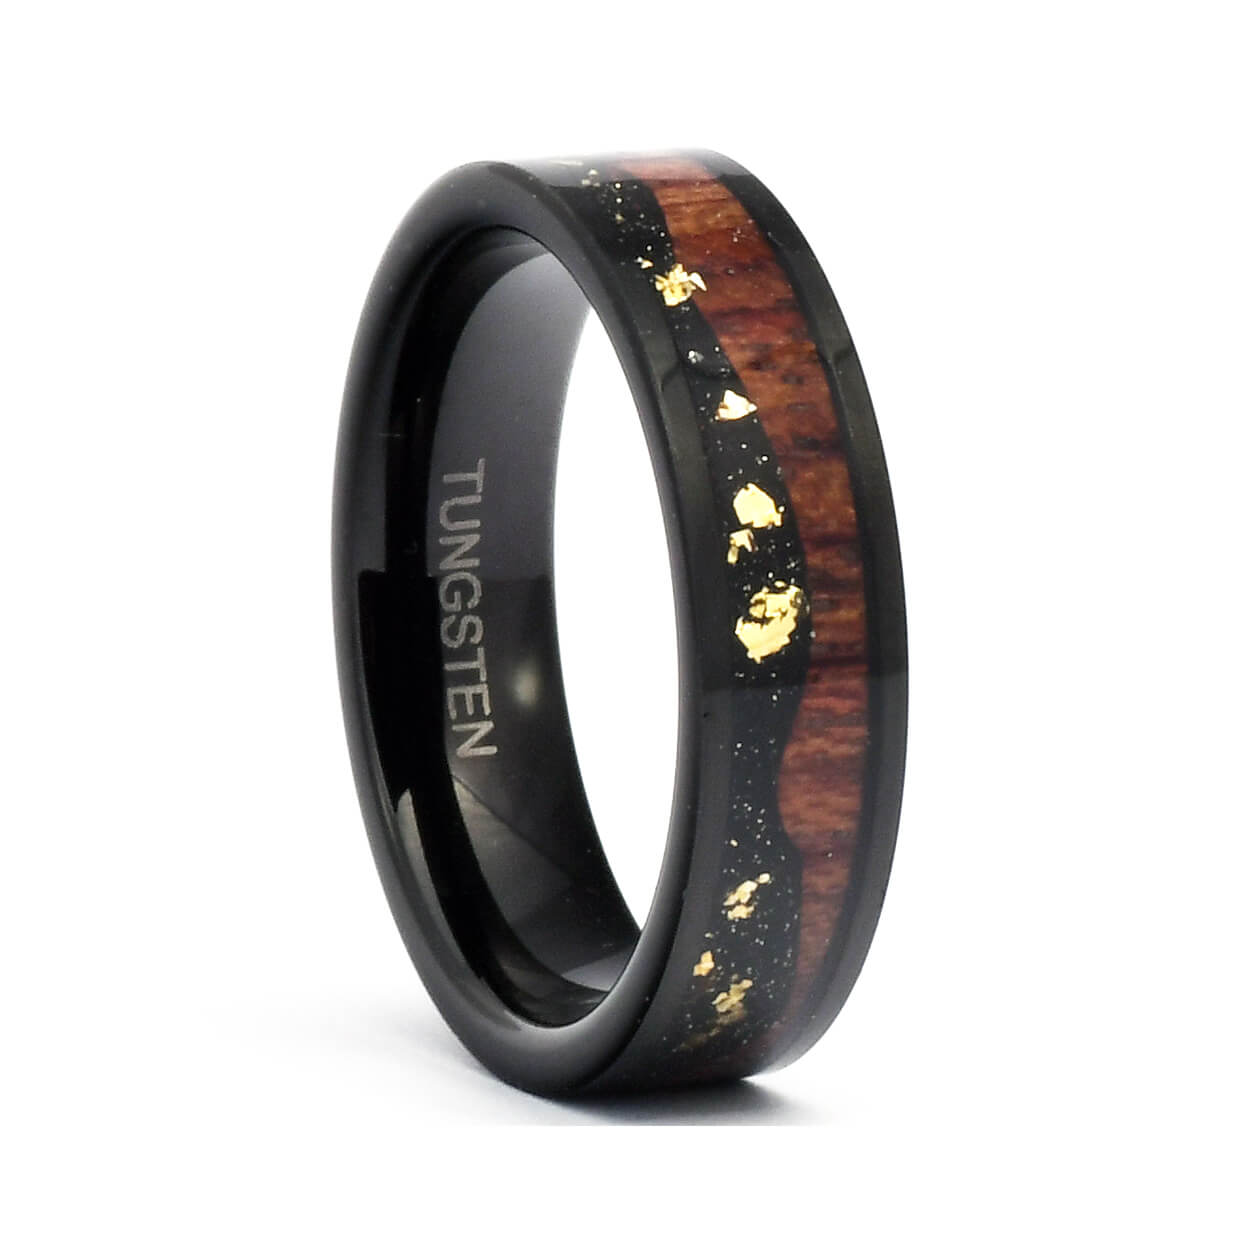 The Zen - Tungsten Koa Wood Men's Wedding Ring Crushed Gold